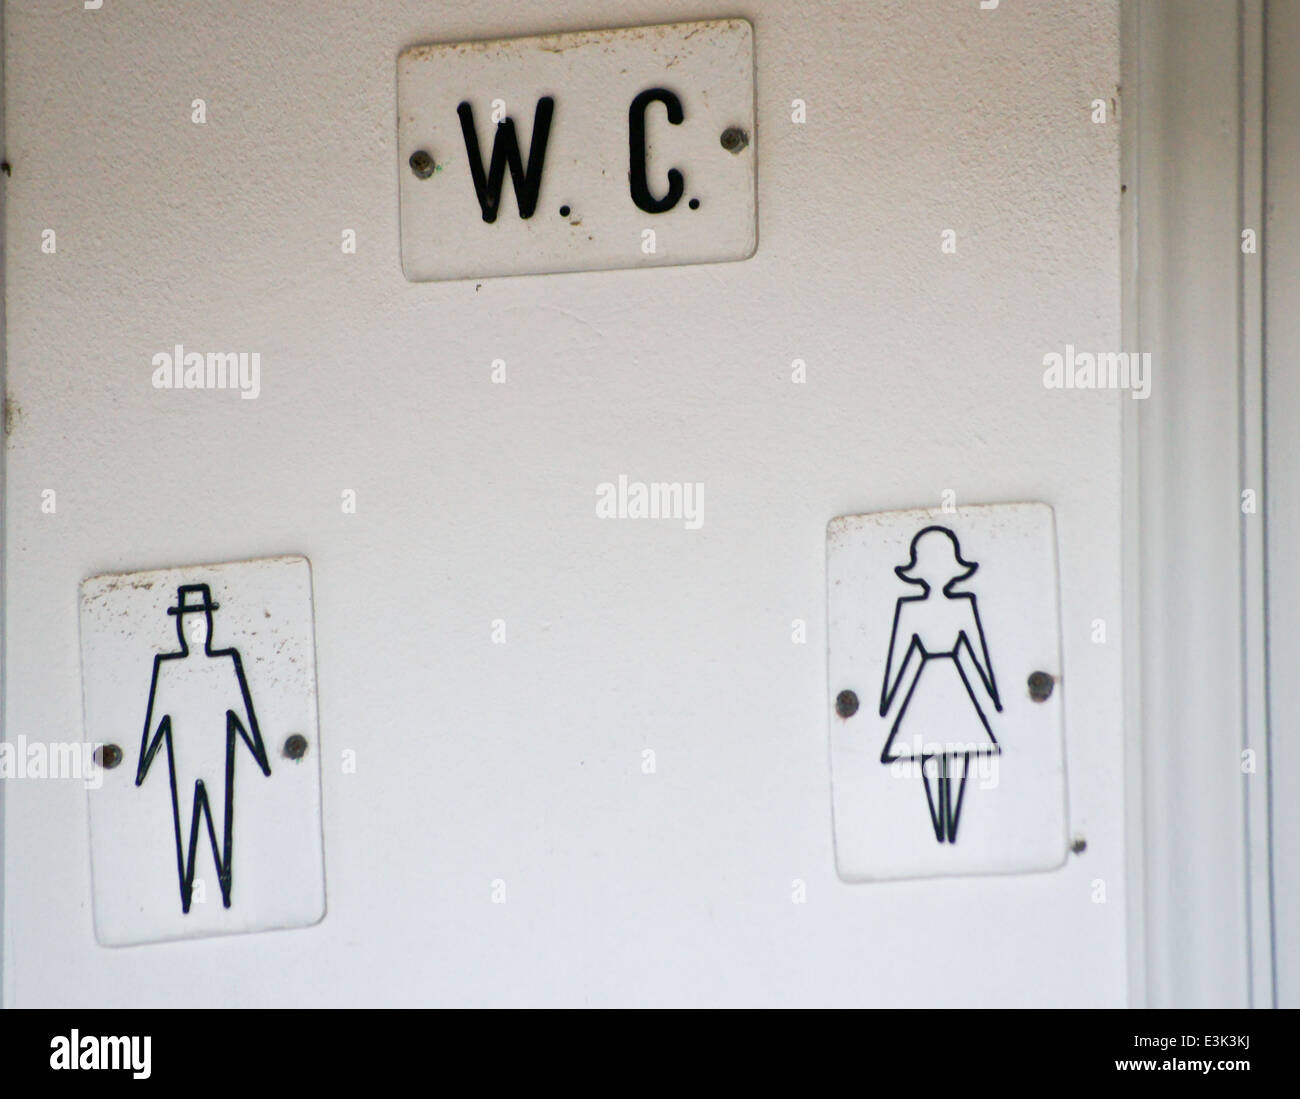 Toilet sign with diagrams of man and woman, Kos Town, Kos, Greece Stock Photo